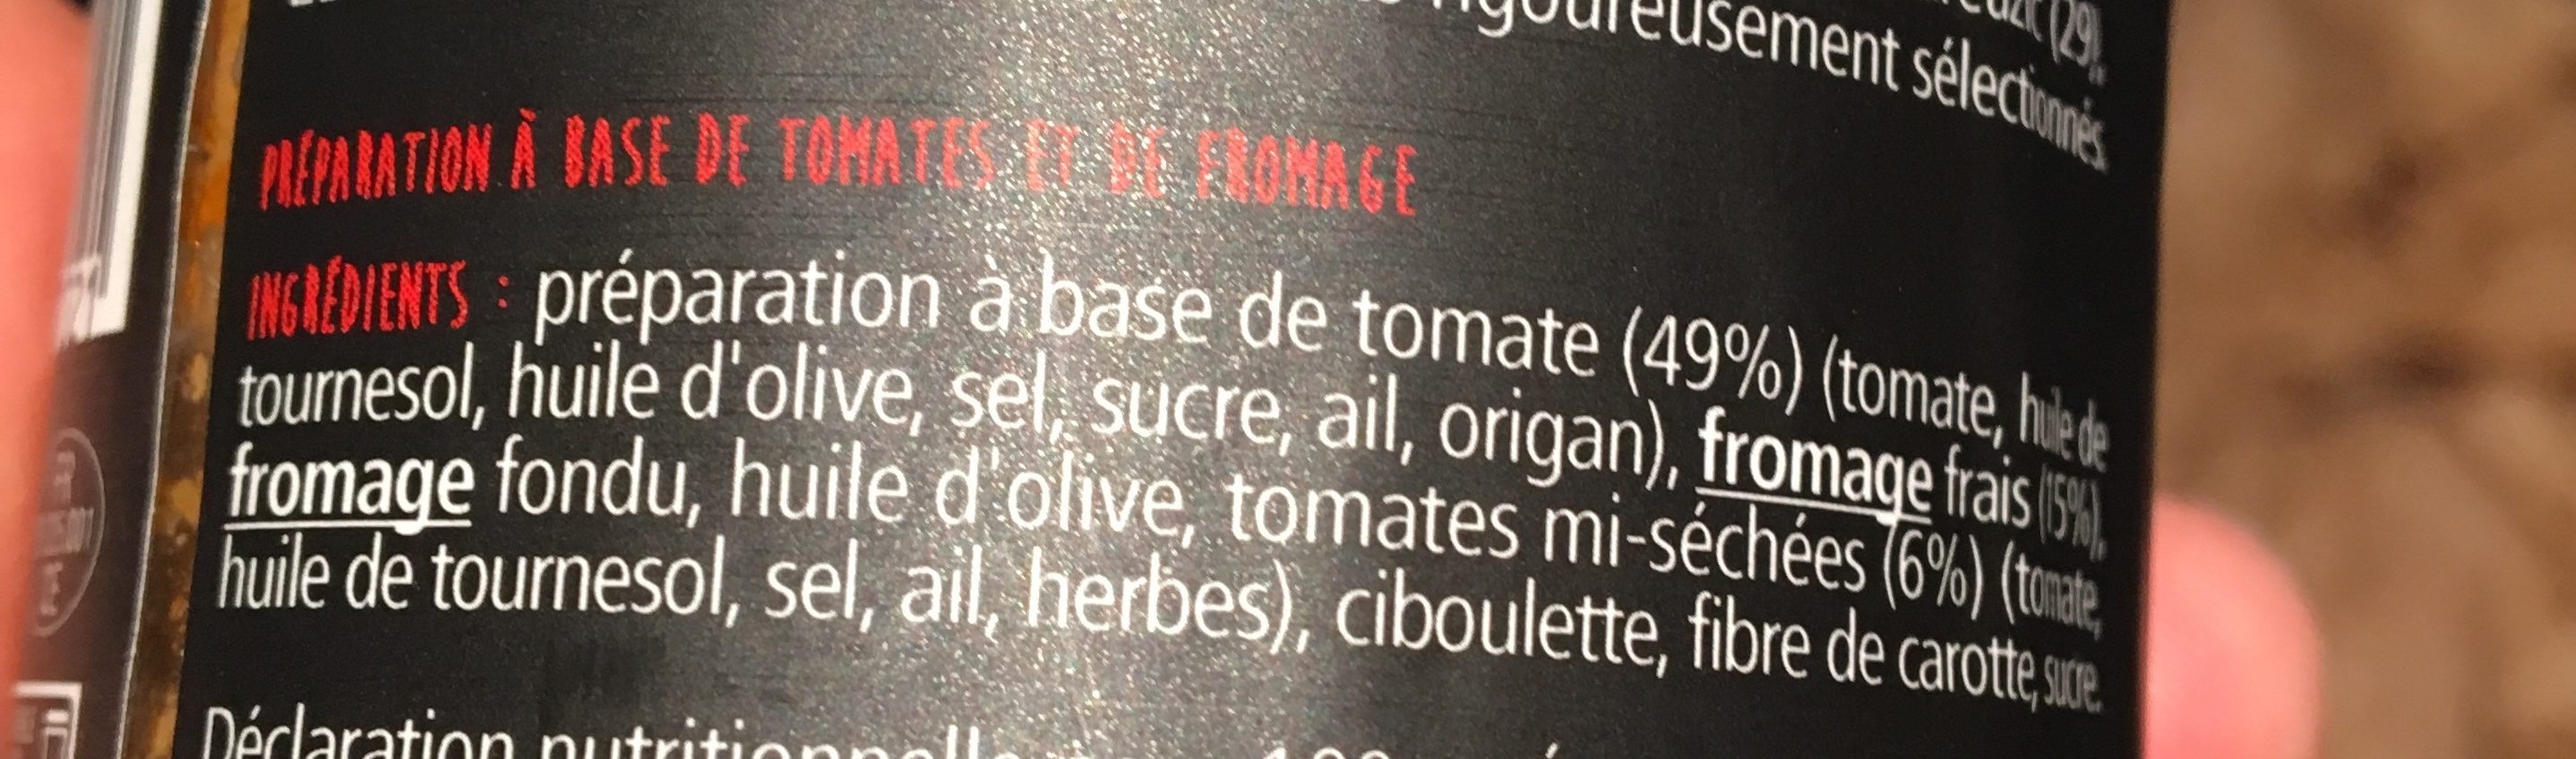 Caviar de tomates - Ingredients - fr